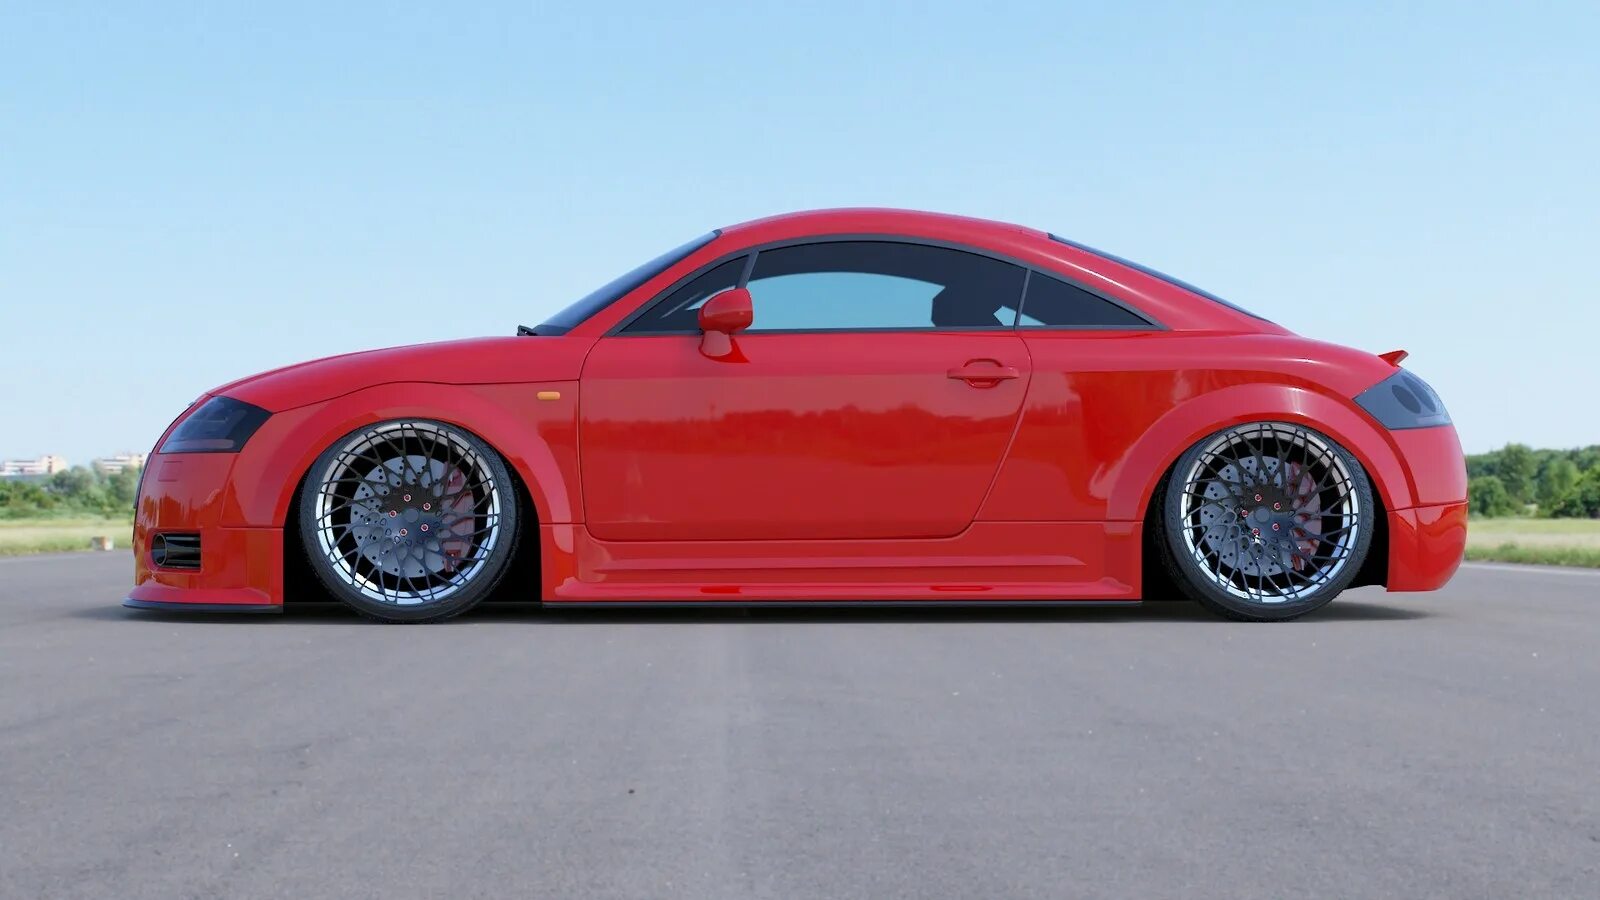 Audi mk2